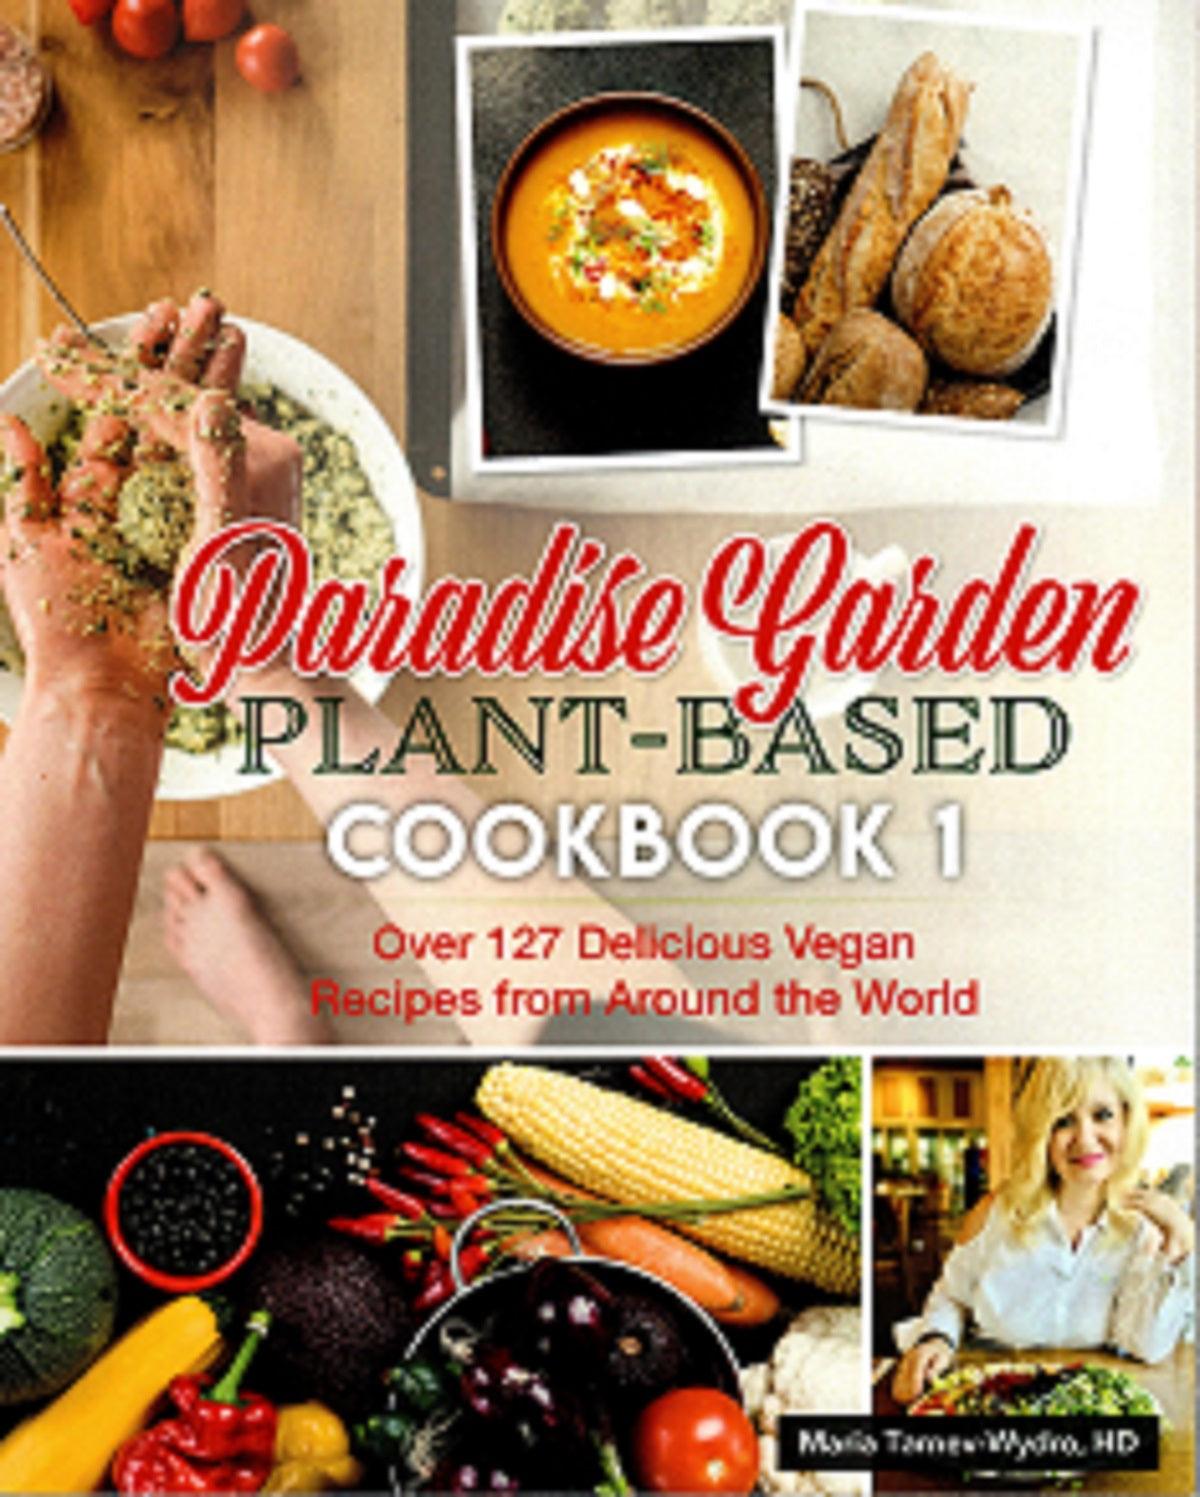 Paradise Garden Plant Based Cookbook 1 - Immediate E-book Download.